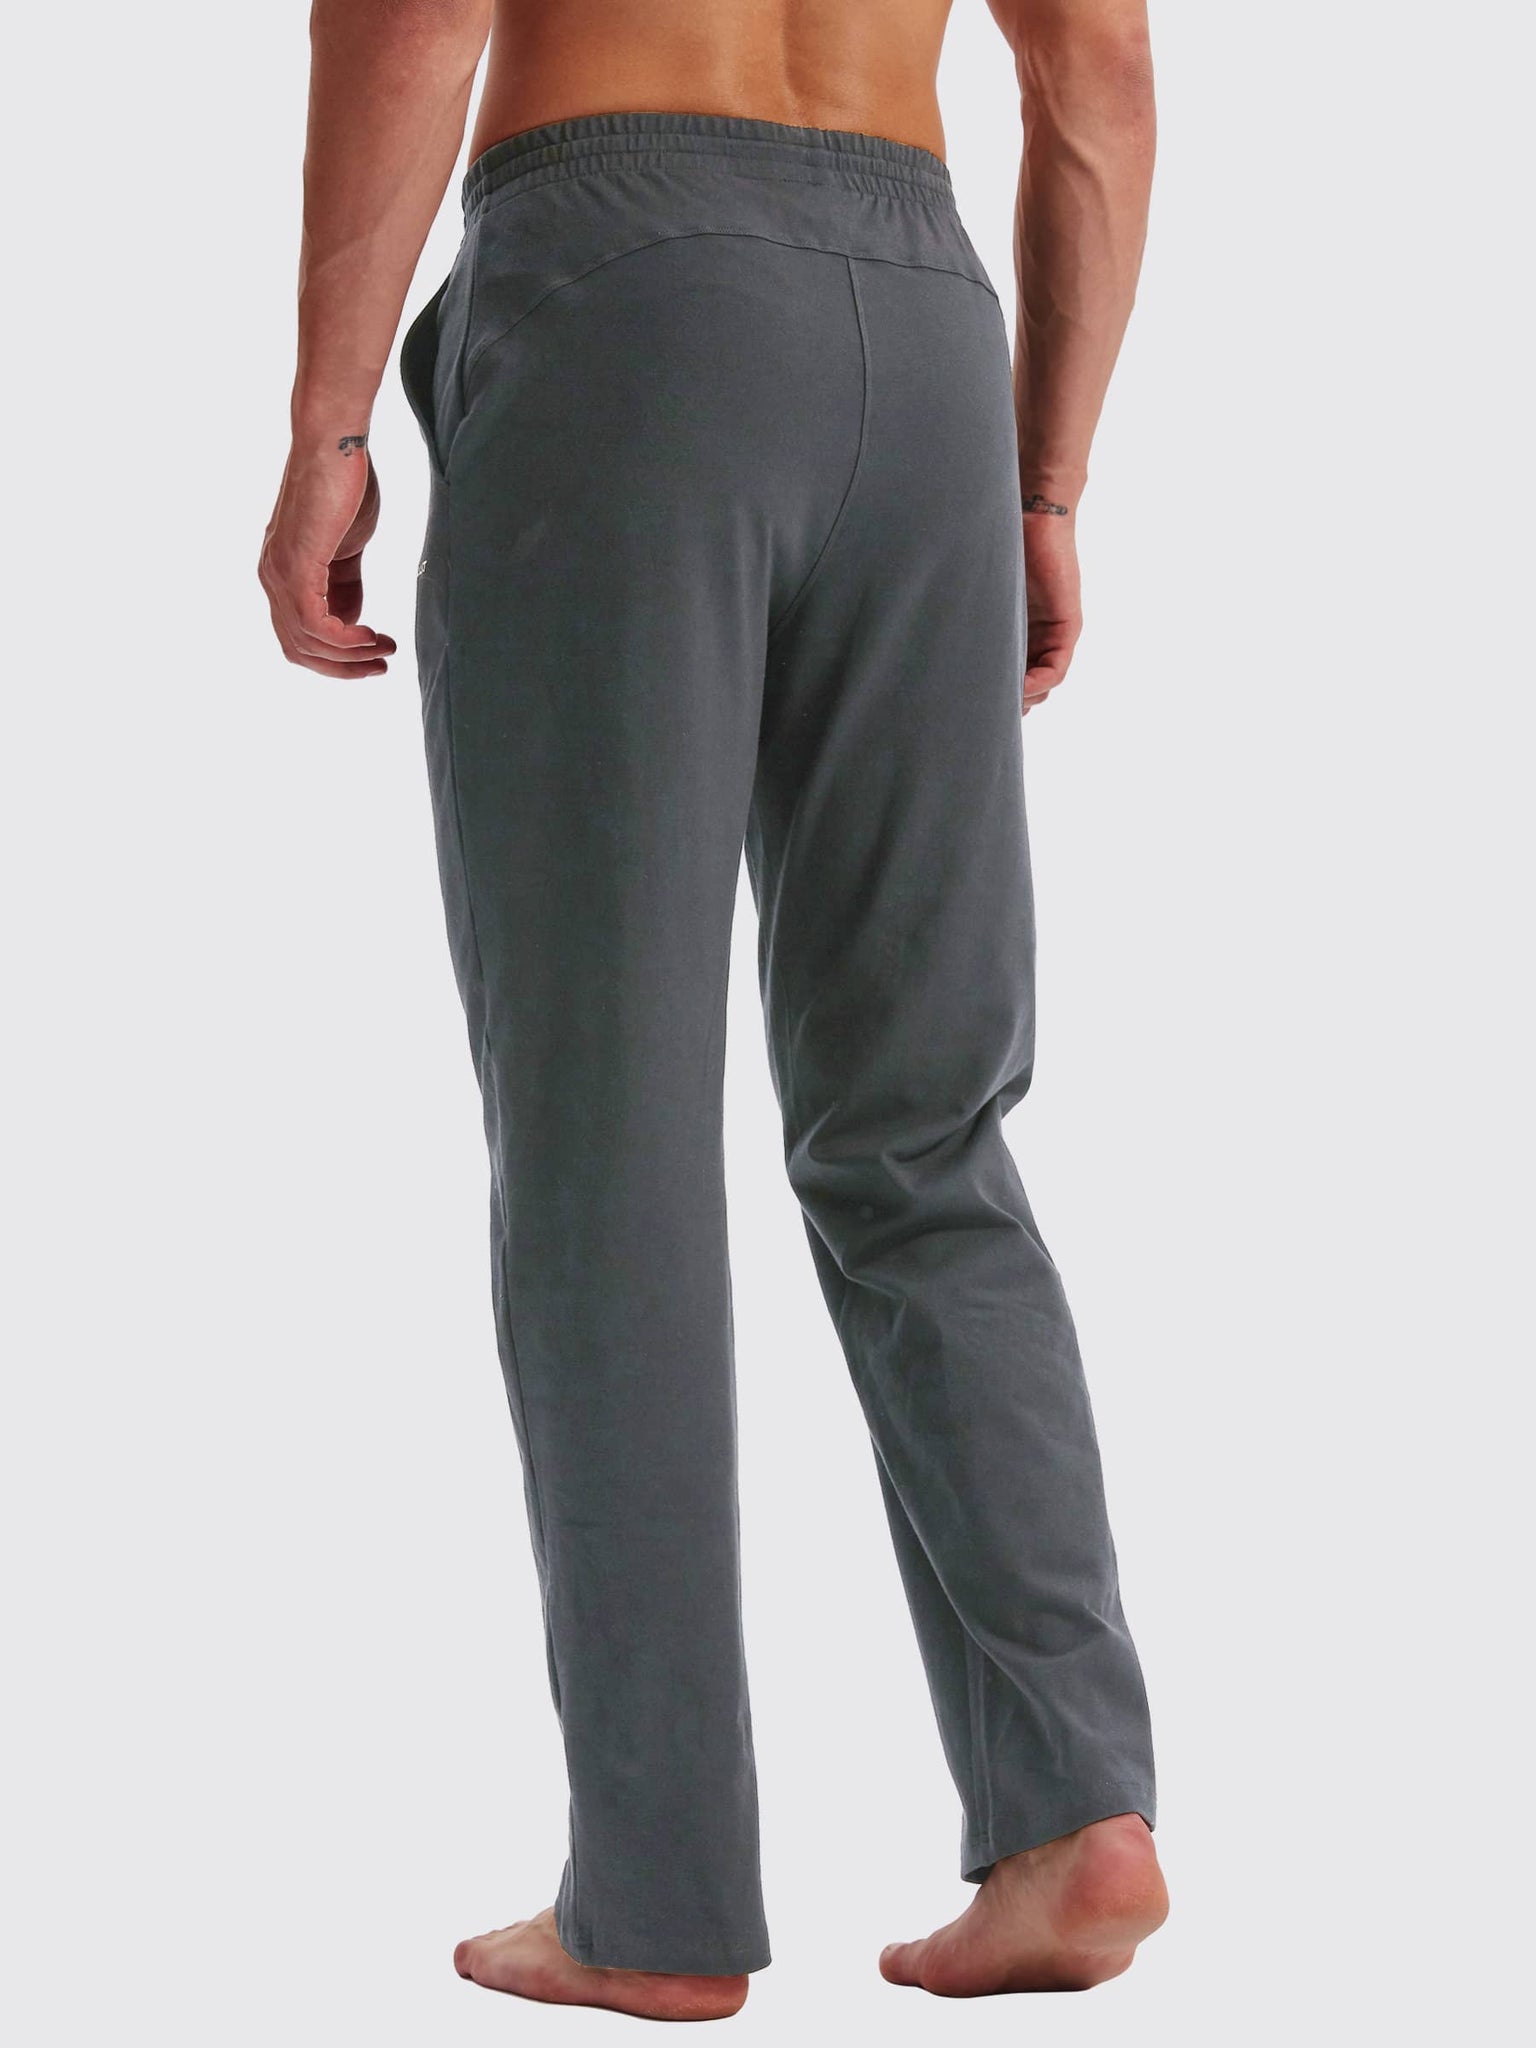 Men's Cotton Yoga Balance Sweatpants_DeepGray_model4